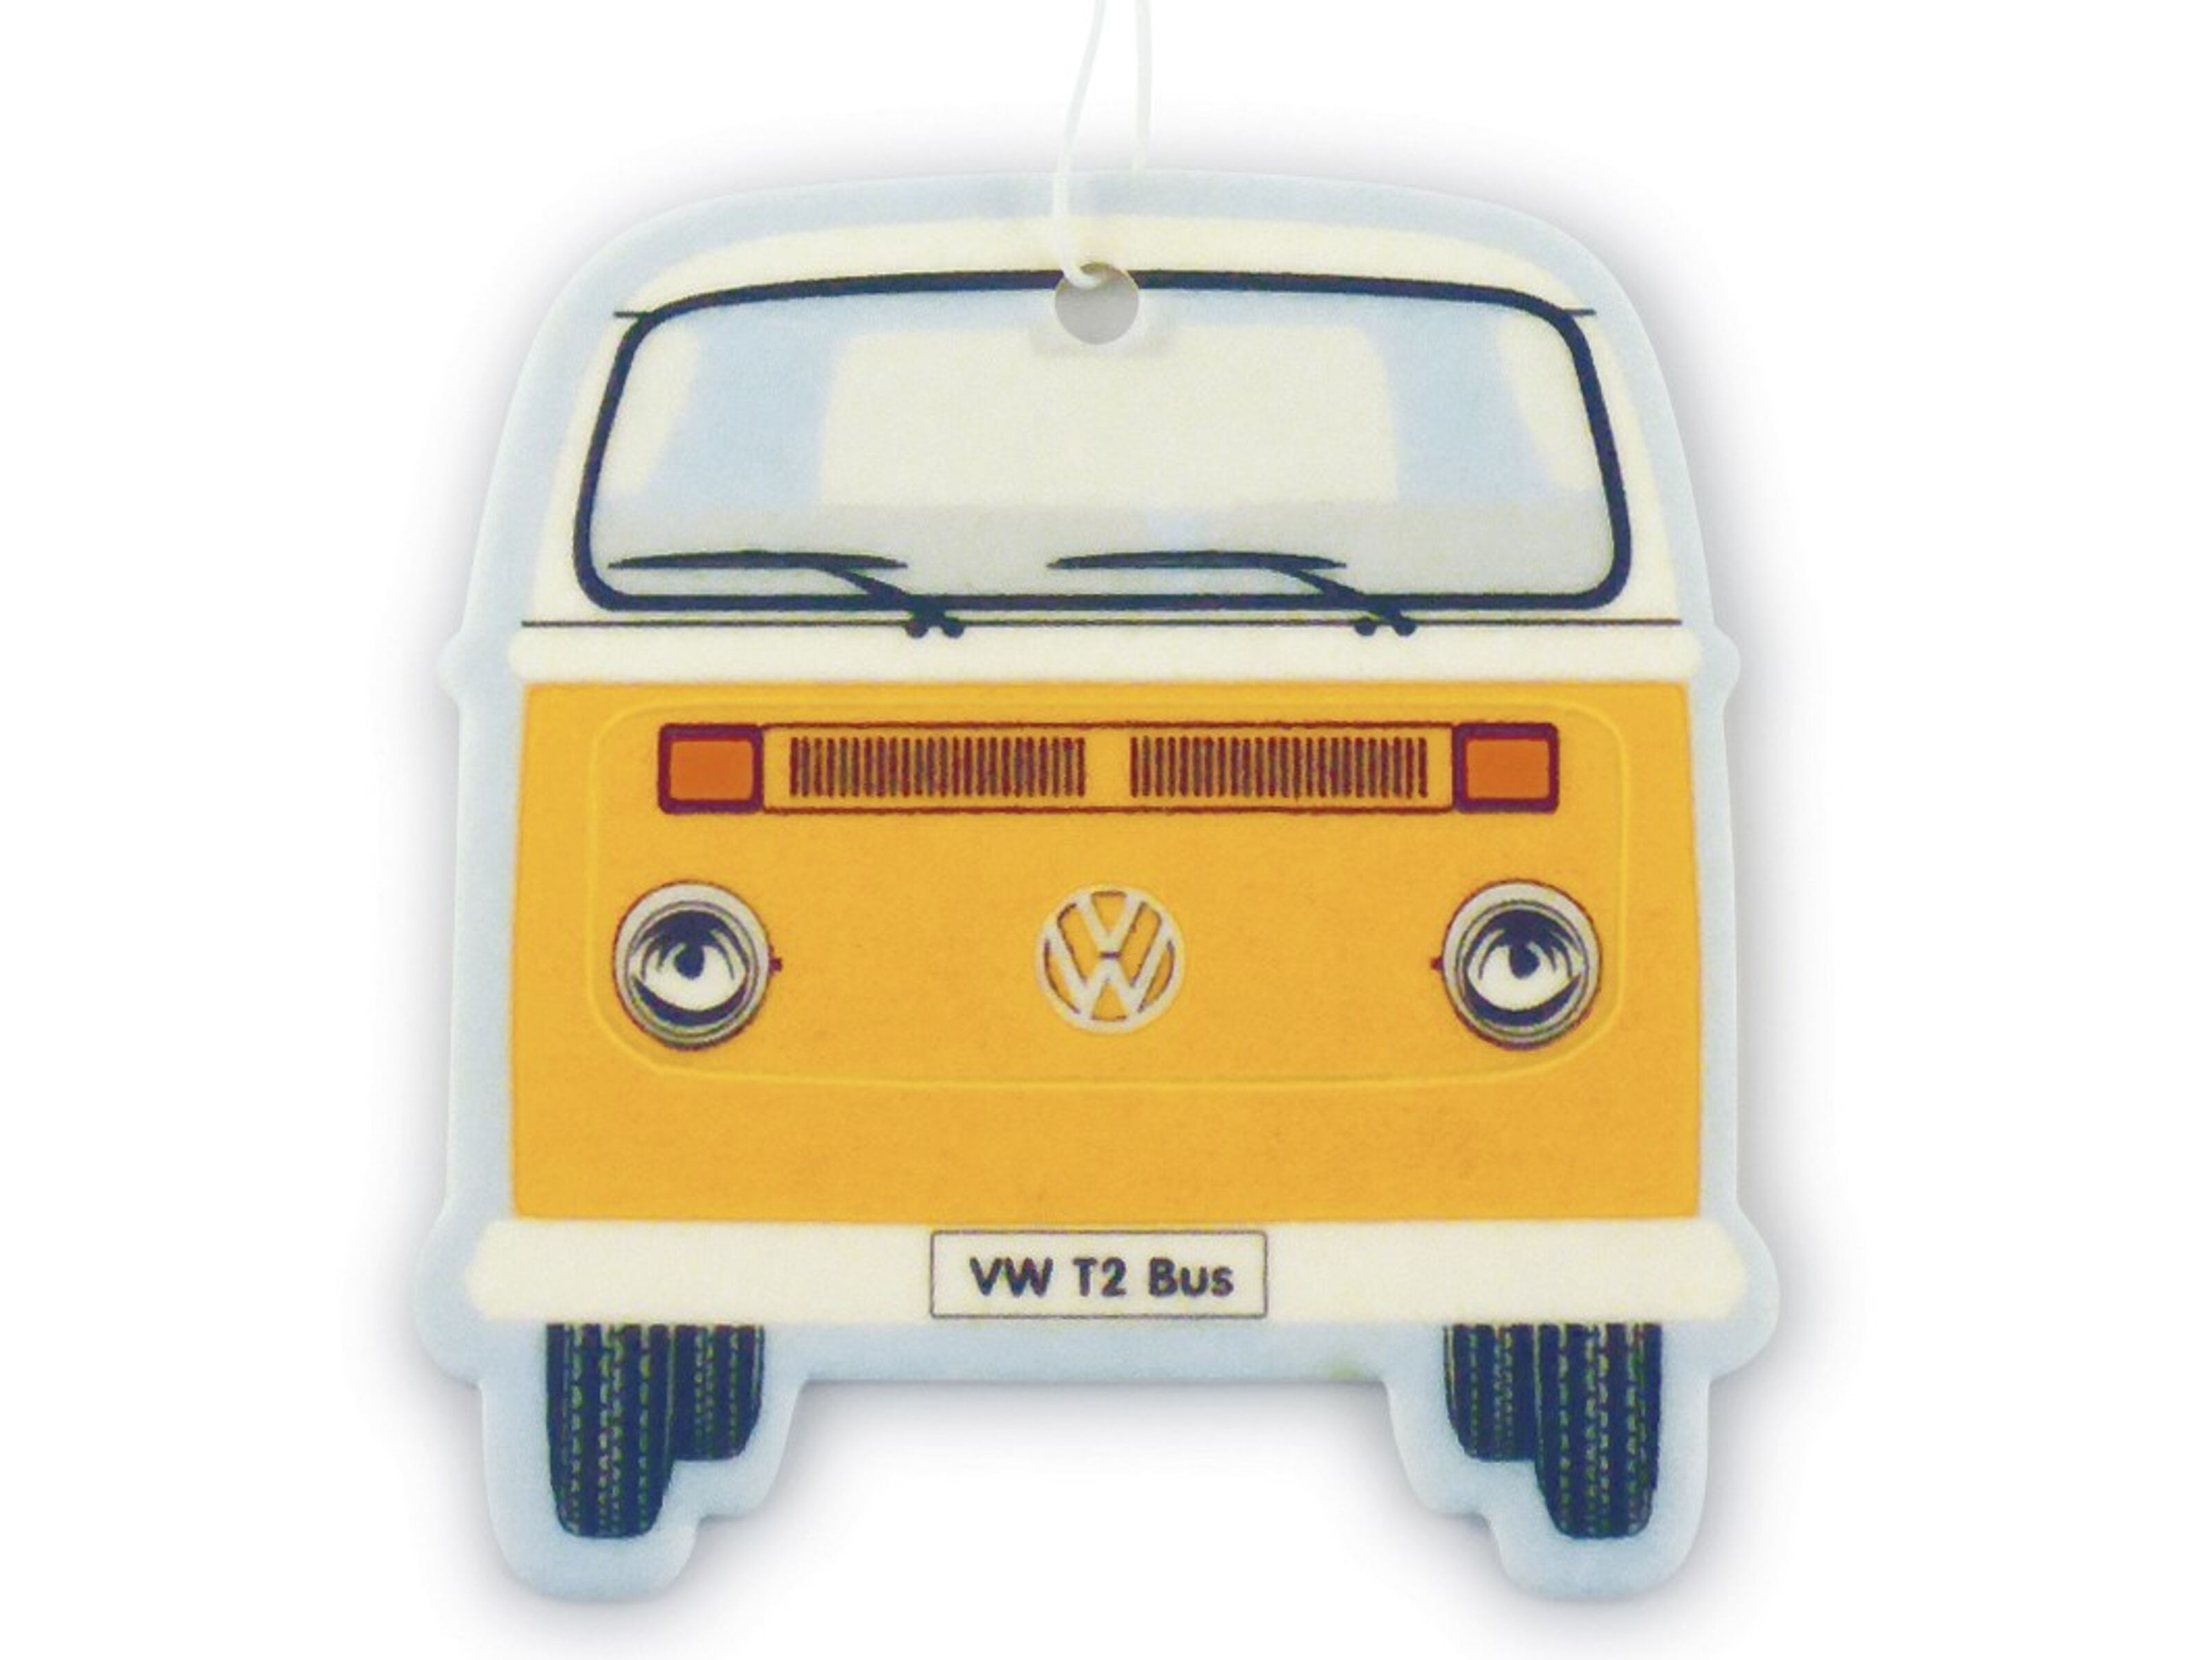 Brisa VW T2 Bus Spardose Moneybank - Yellow - Boxed